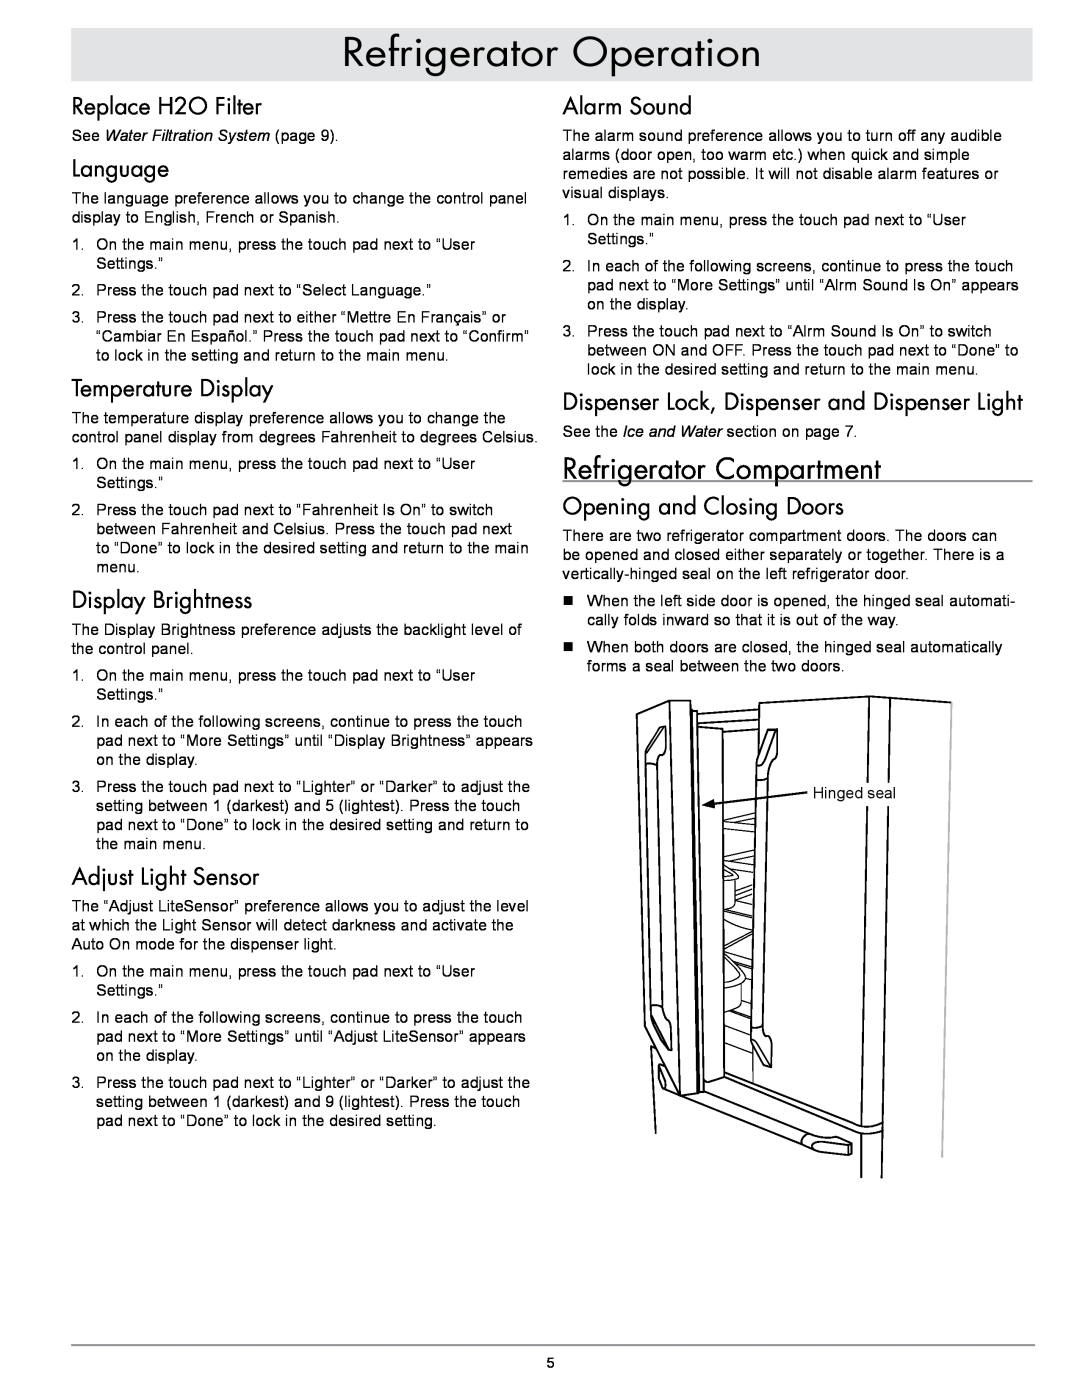 Dacor EF36IWF Refrigerator Compartment, Replace H2O Filter, Language, Temperature Display, Display Brightness, Alarm Sound 